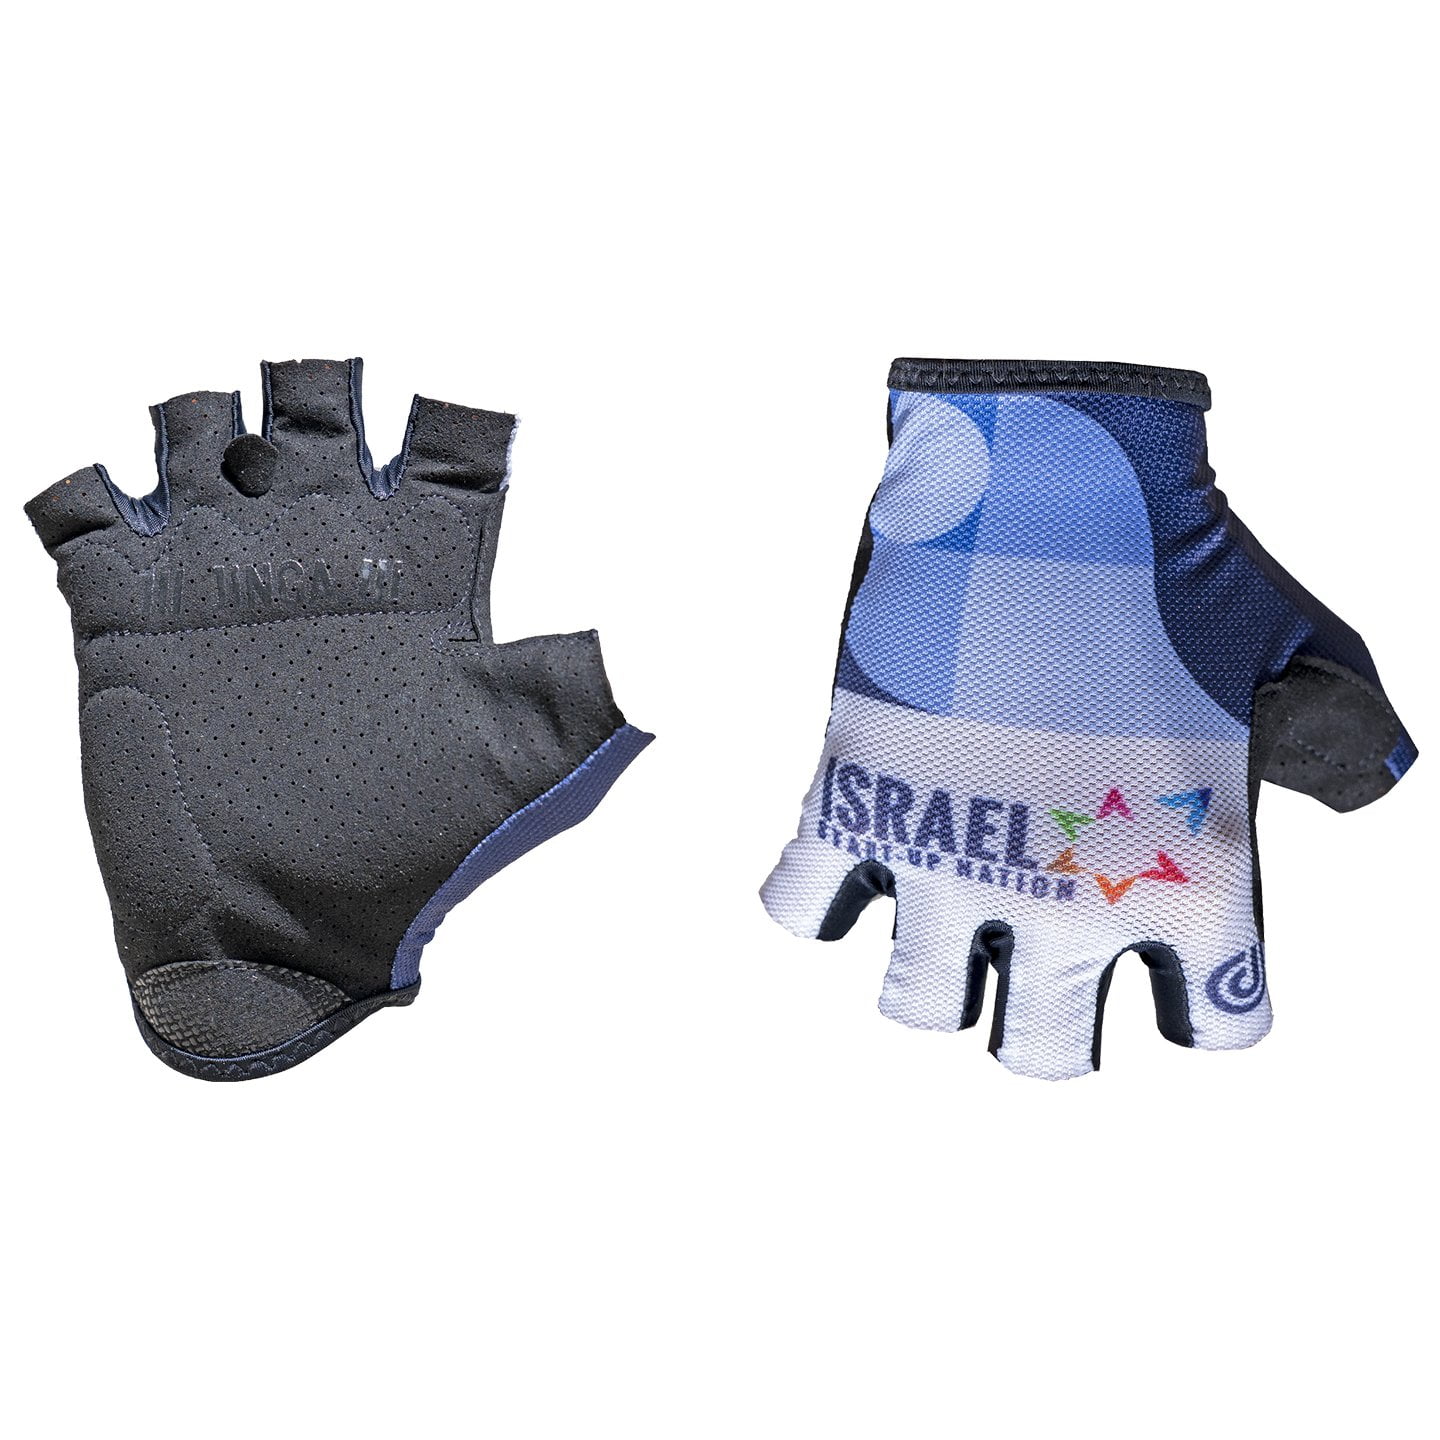 ISRAEL PREMIER TECH 2022 Cycling Gloves, for men, size S, Cycling gloves, Cycling clothing